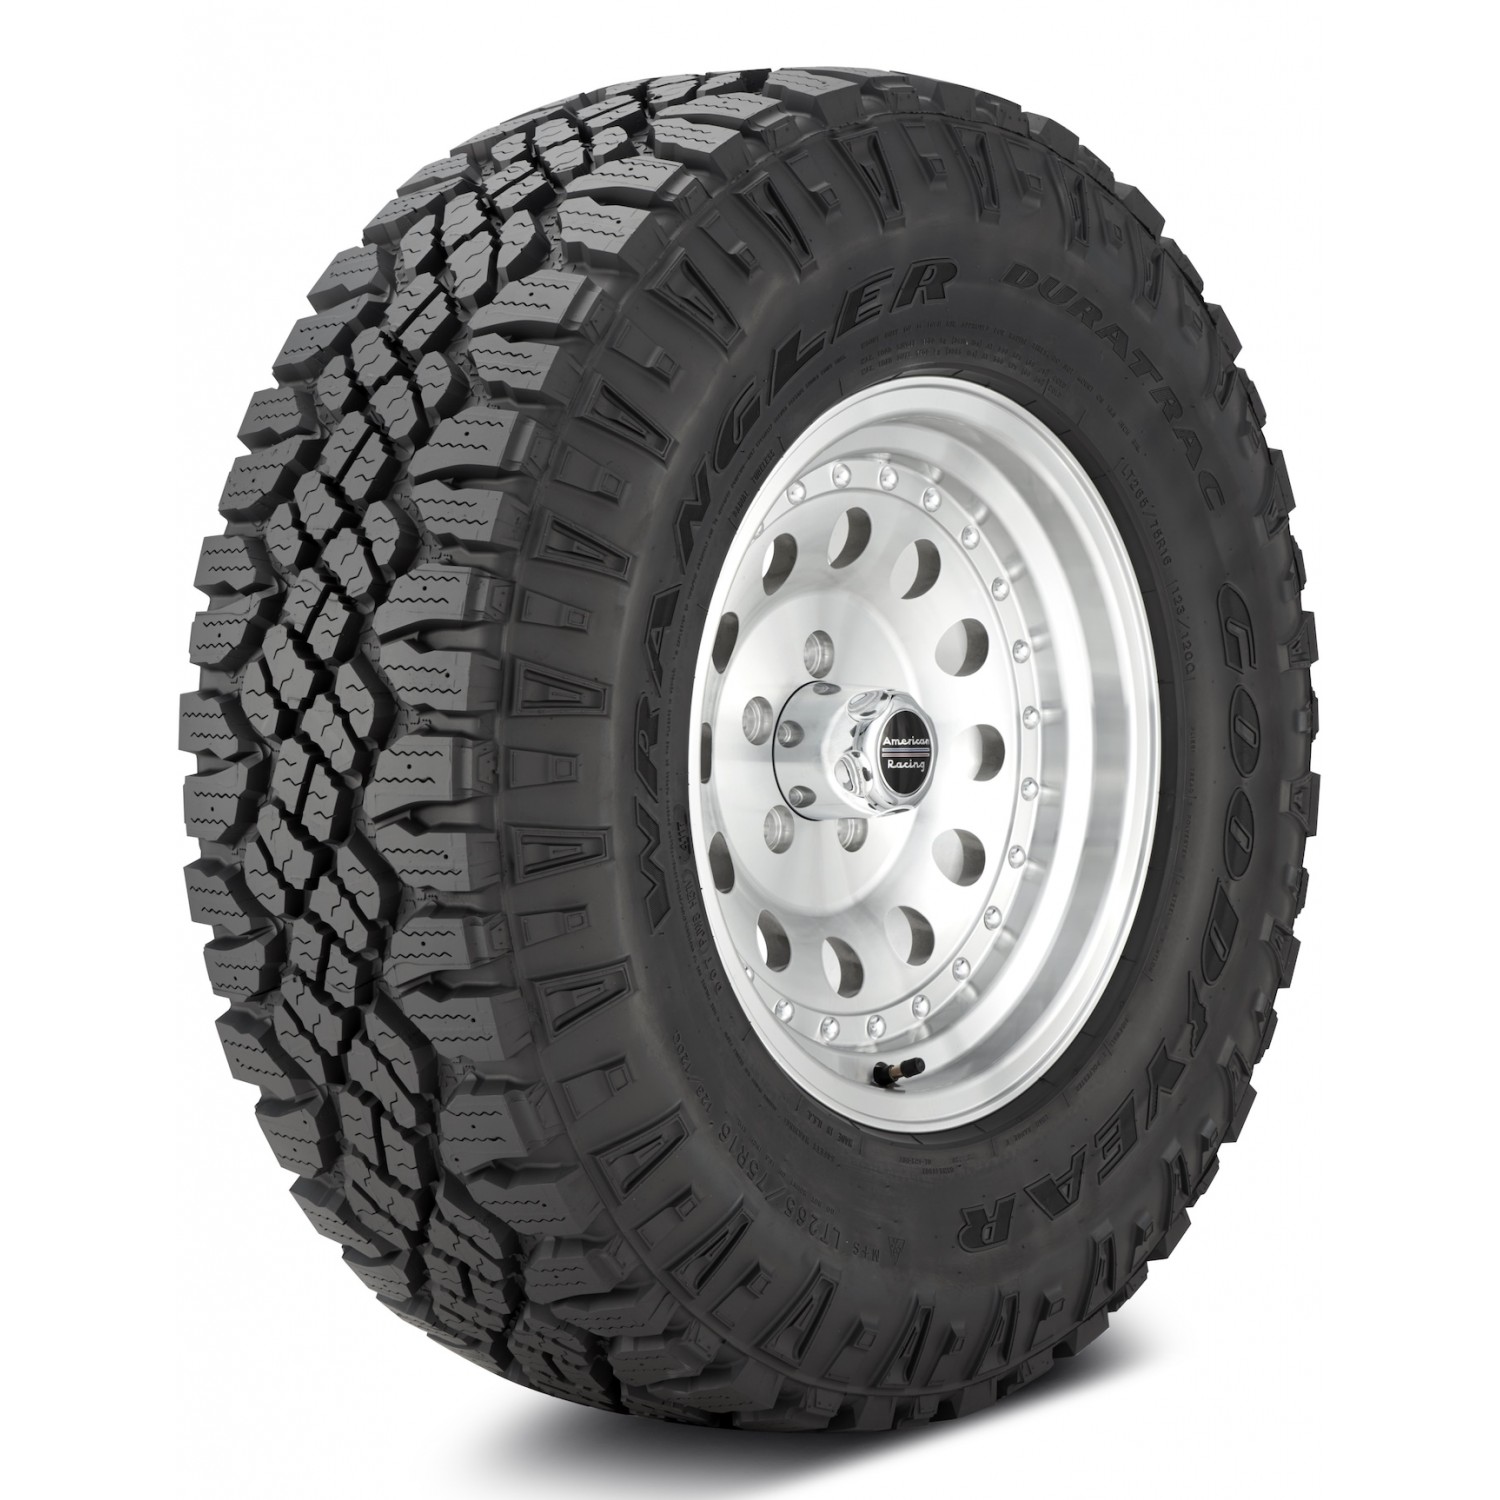 Goodyear Wrangler DuraTrac (P) Black Sidewall Tire (255/65R19 114Q XL)  vzn121346